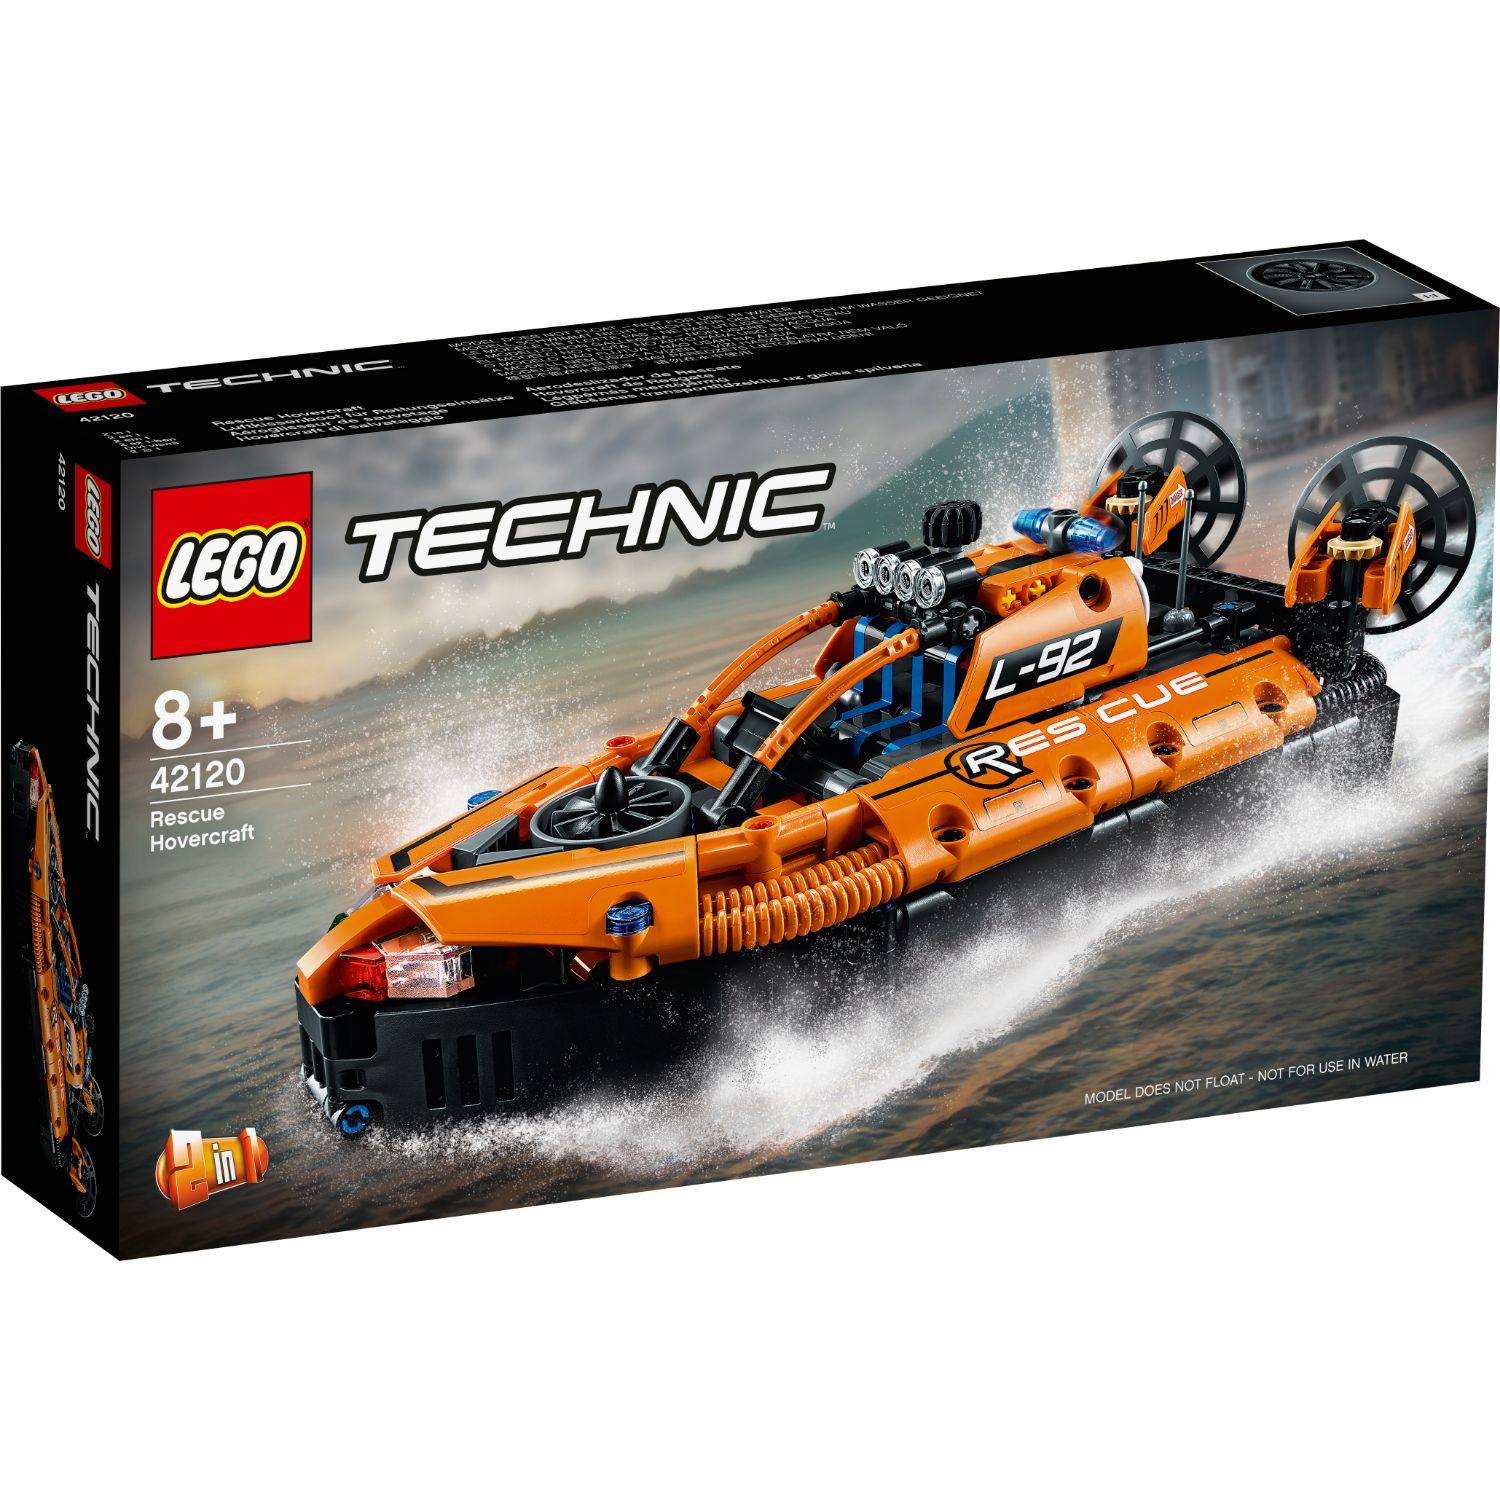 LEGO TECHNIC 42120 REDDINGHOVERCRAFT - 411 2120